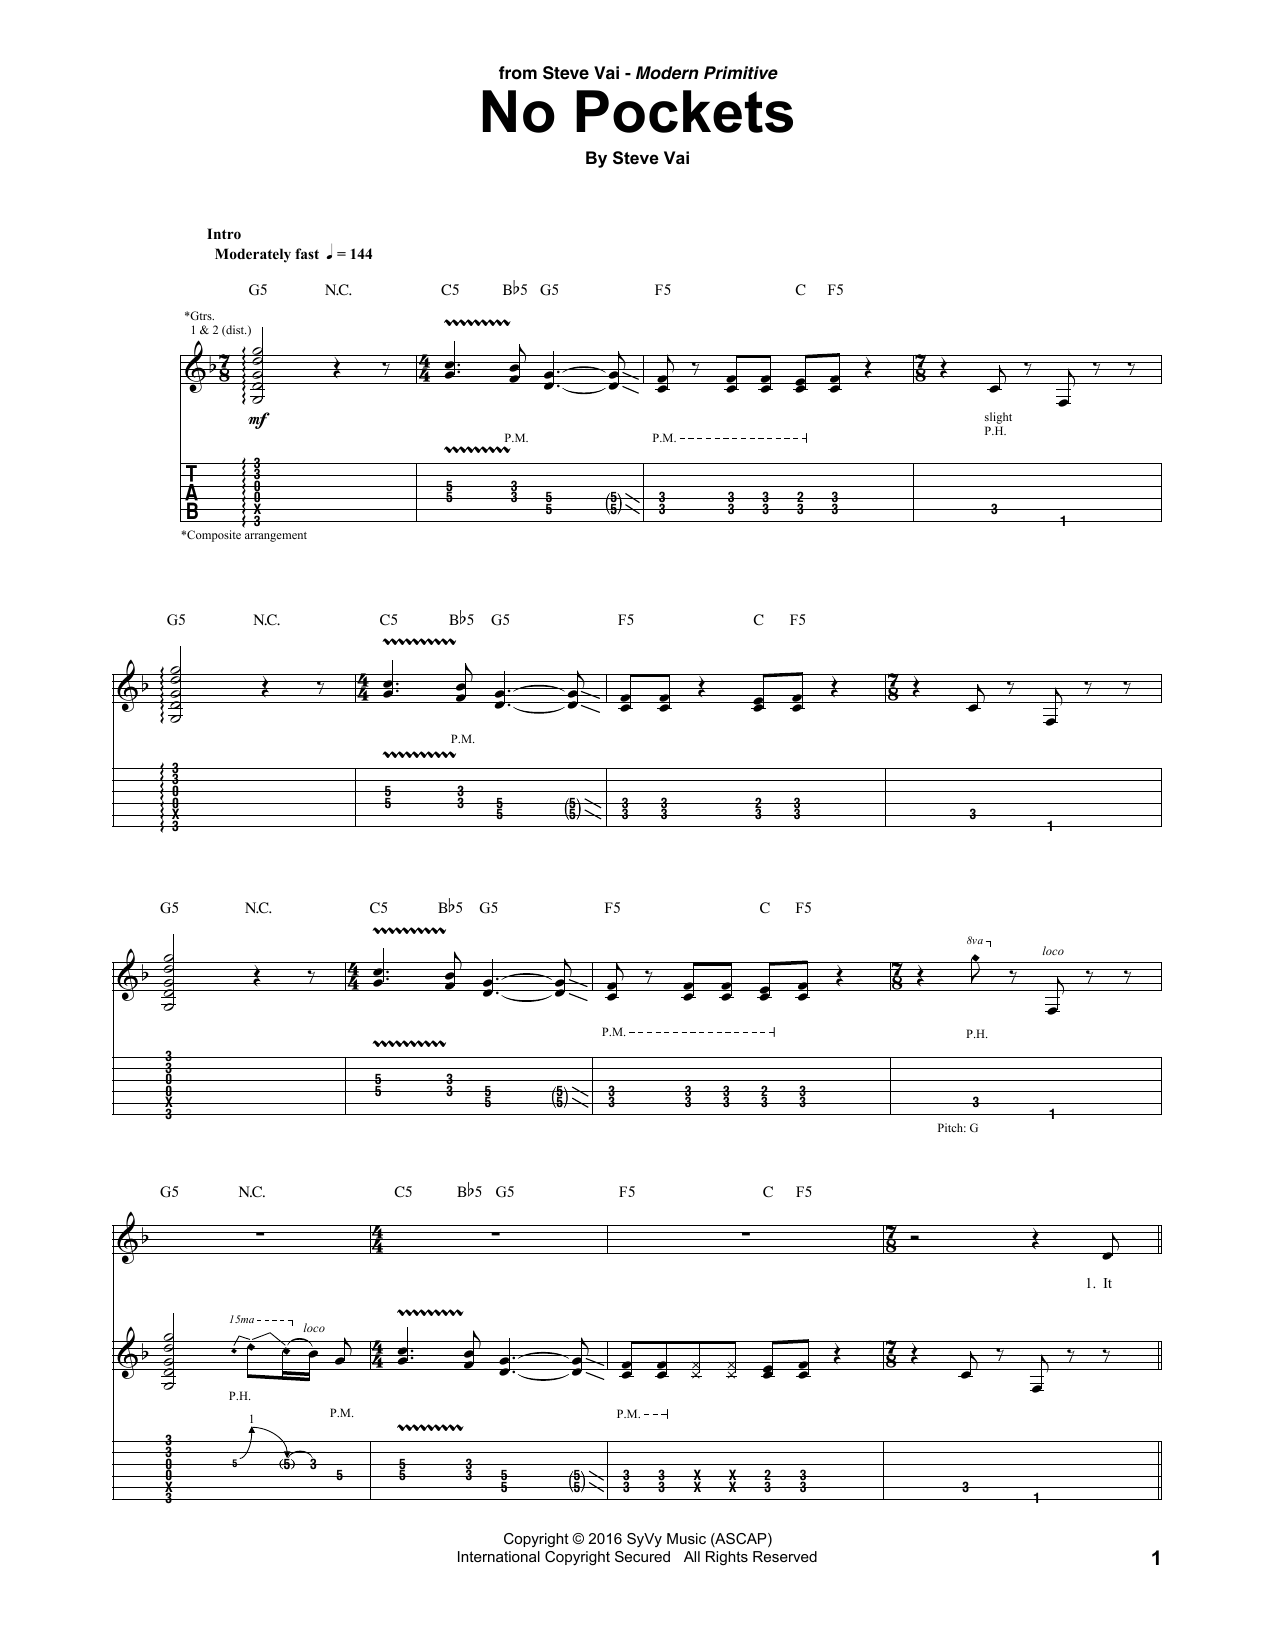 Steve Vai No Pockets Sheet Music Notes & Chords for Guitar Tab - Download or Print PDF